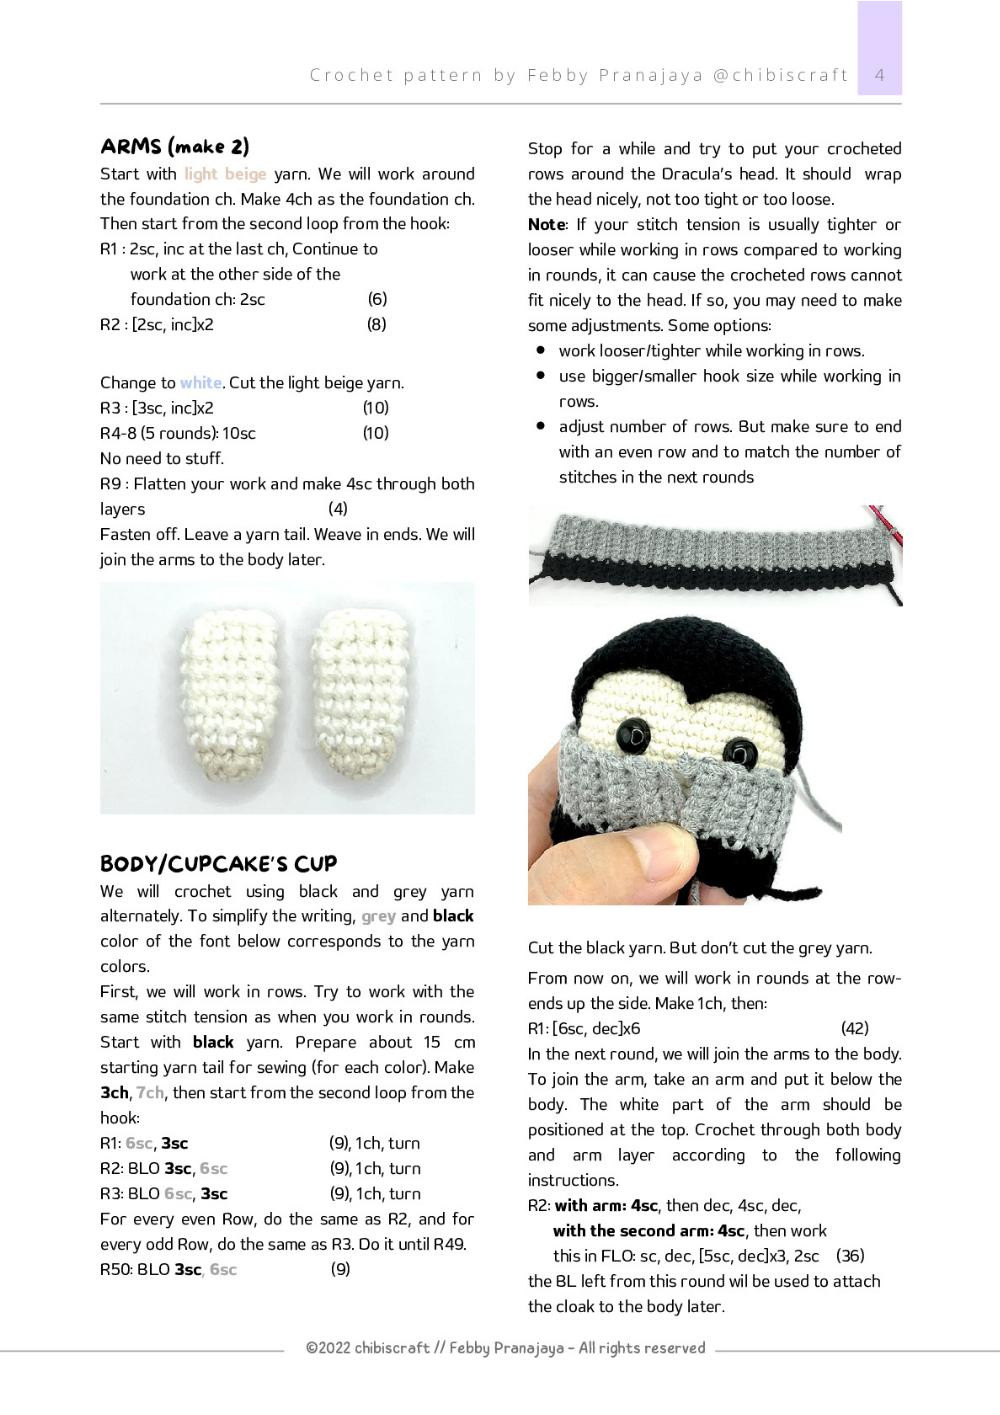 Crochet pattern | US crochet terms ENGLISH REVERSIBLE DRACULA CUPCAKE